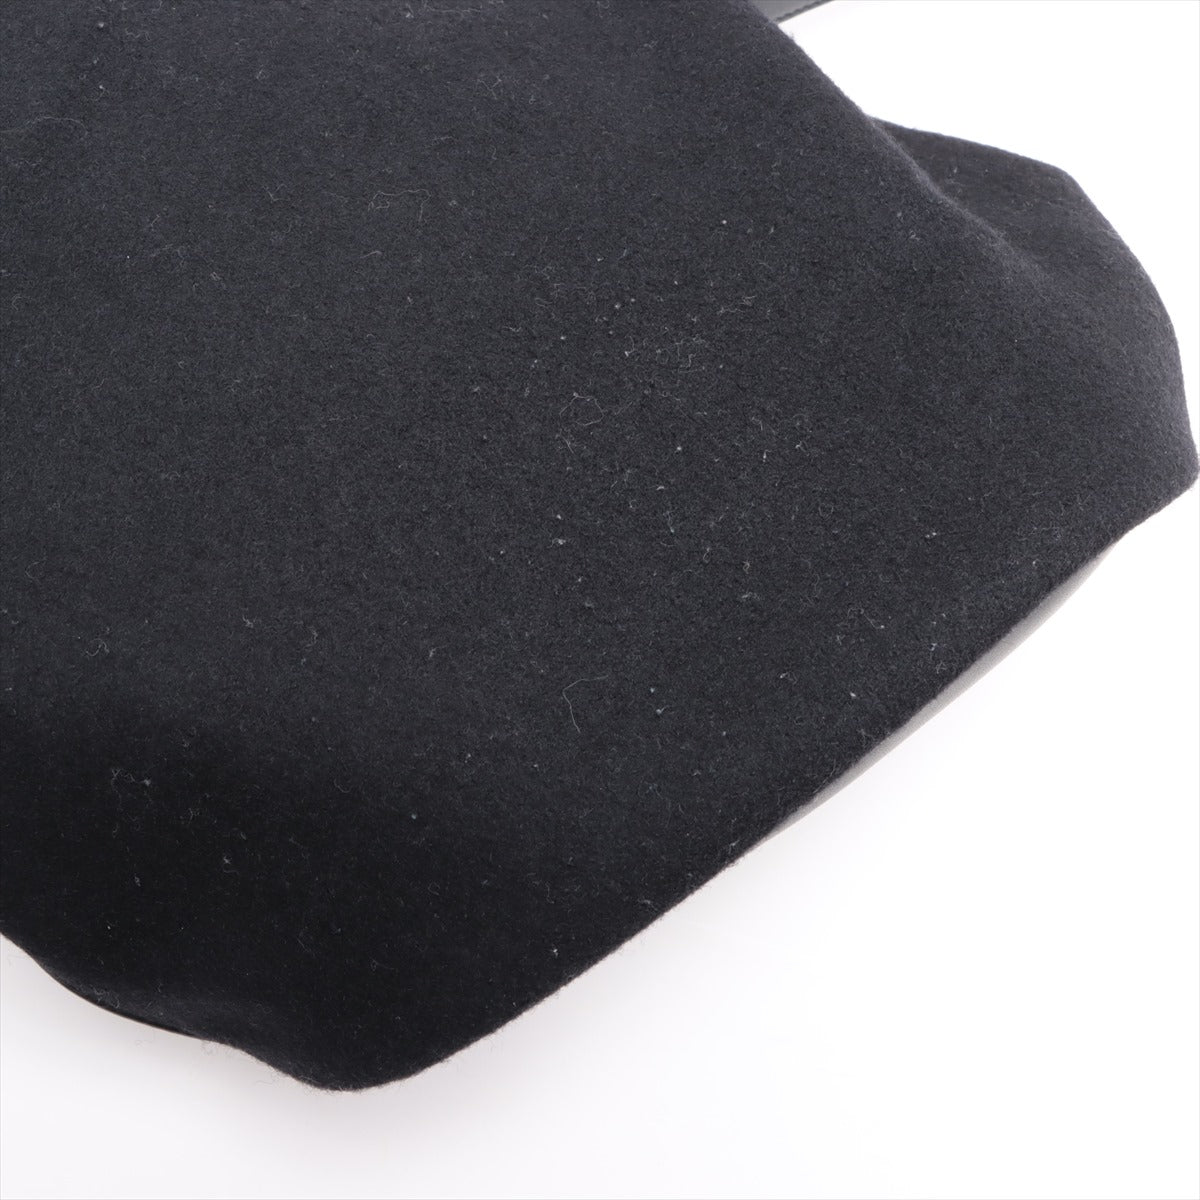 Saint Laurent  Rivgoth Felt x Leather Shoulder Bag Black 710261